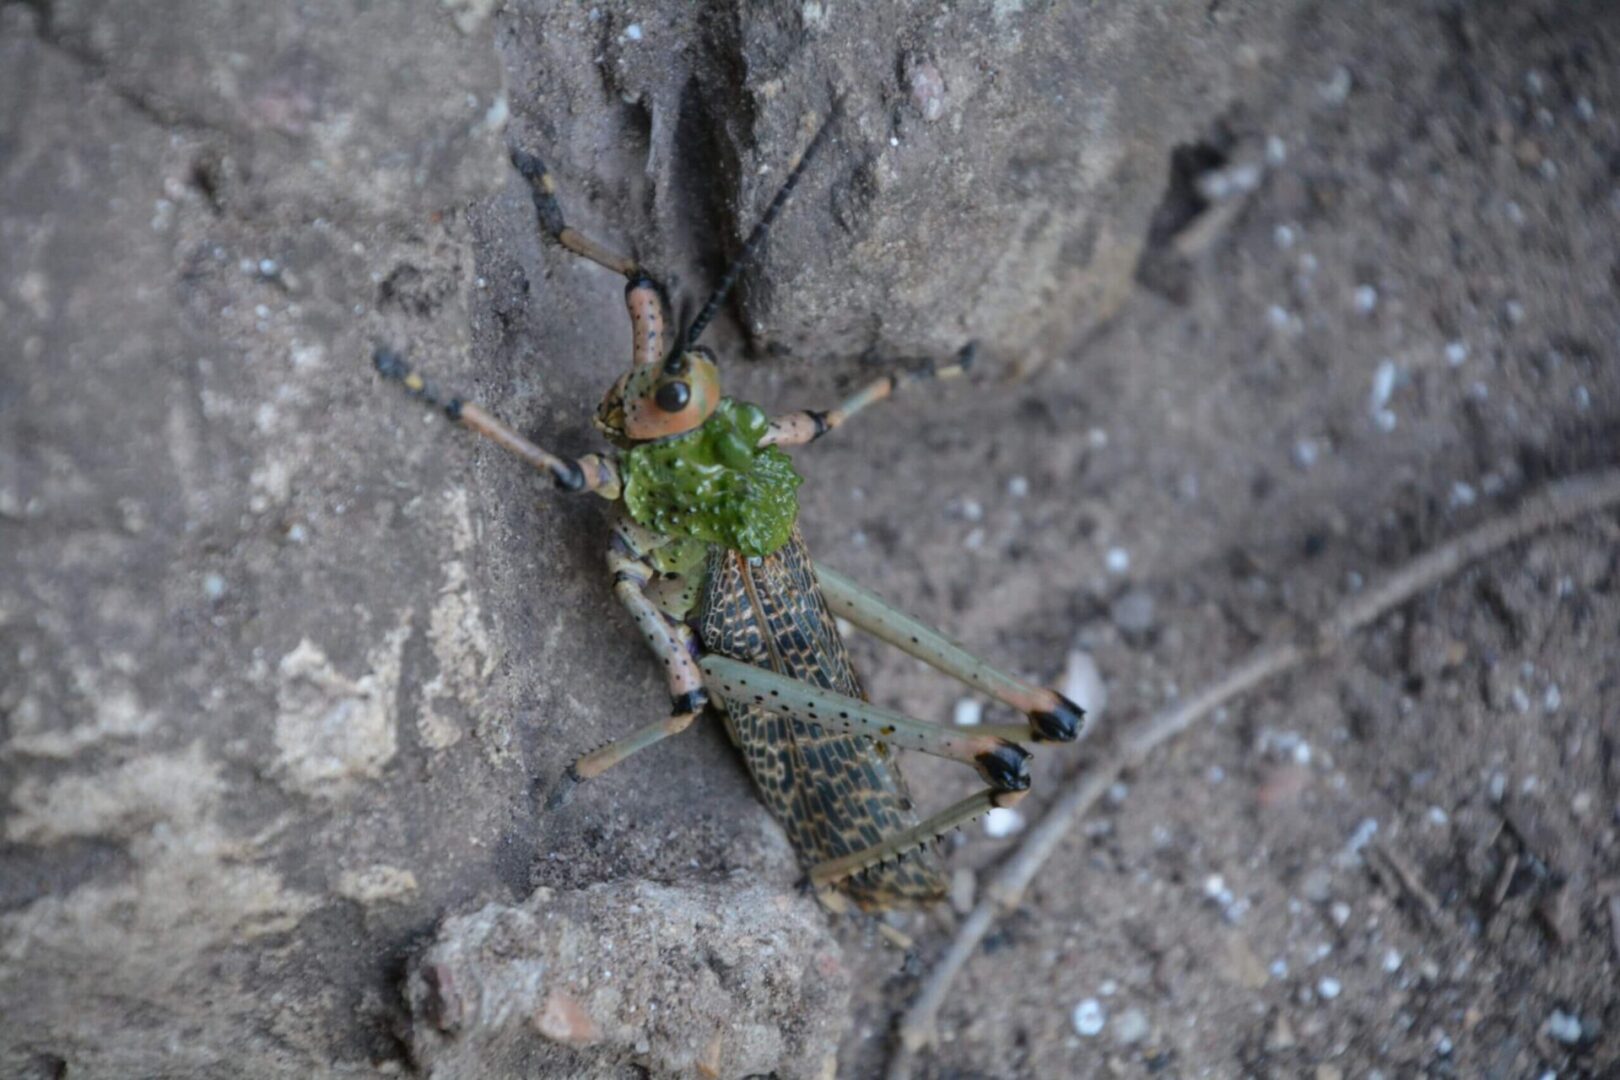 A grasshopper sitting on the ground near some rocks.